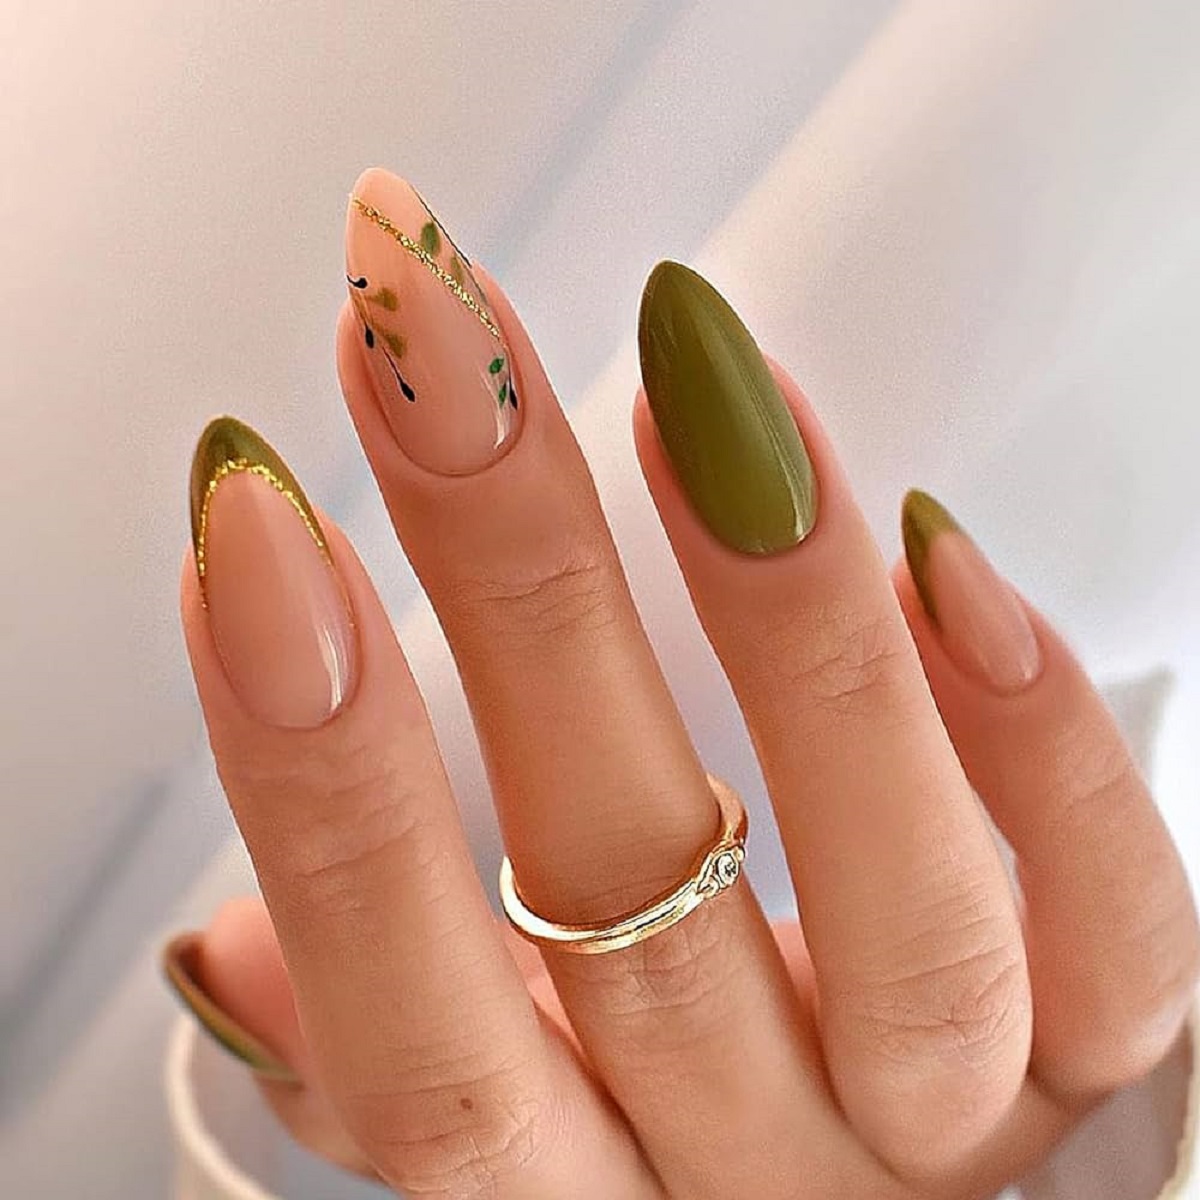 Green Acrylic Nails